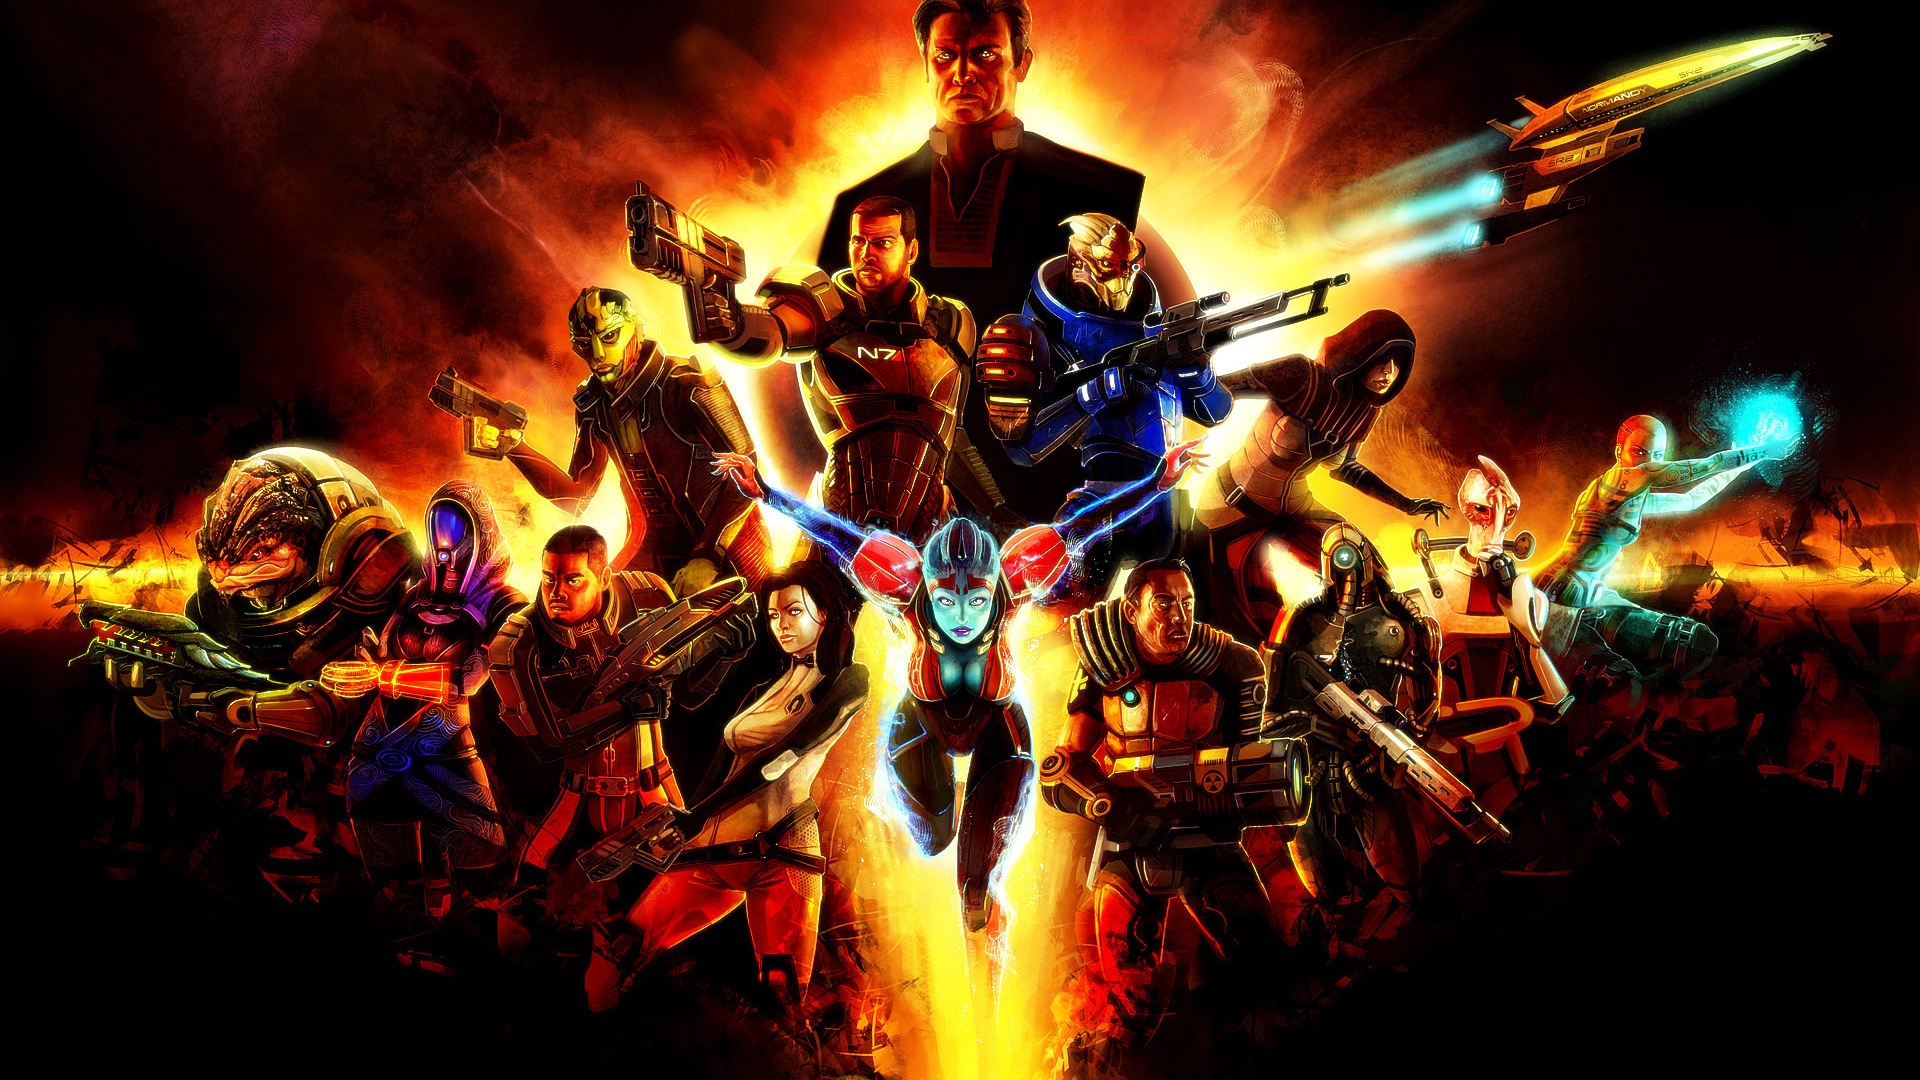 Mass Effect 2 Poster for 1920 x 1080 HDTV 1080p resolution